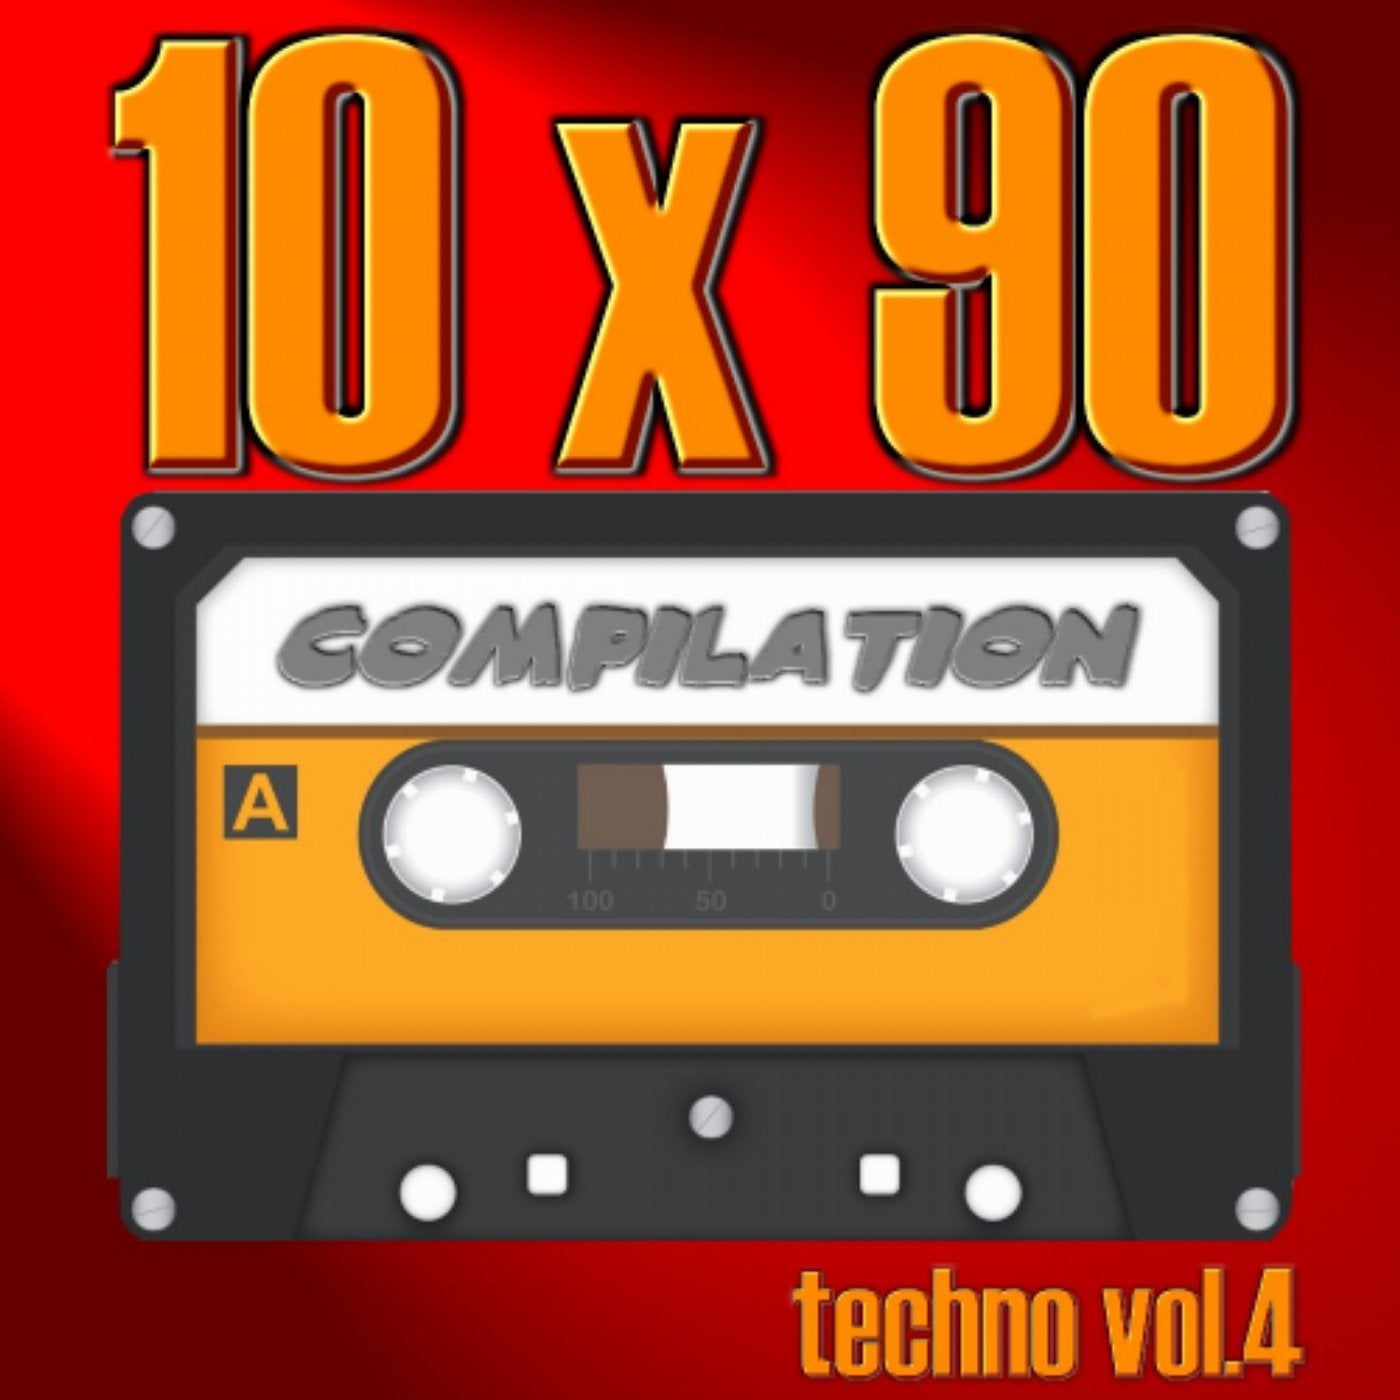 10 X 90 Compilation - Techno Vol.4